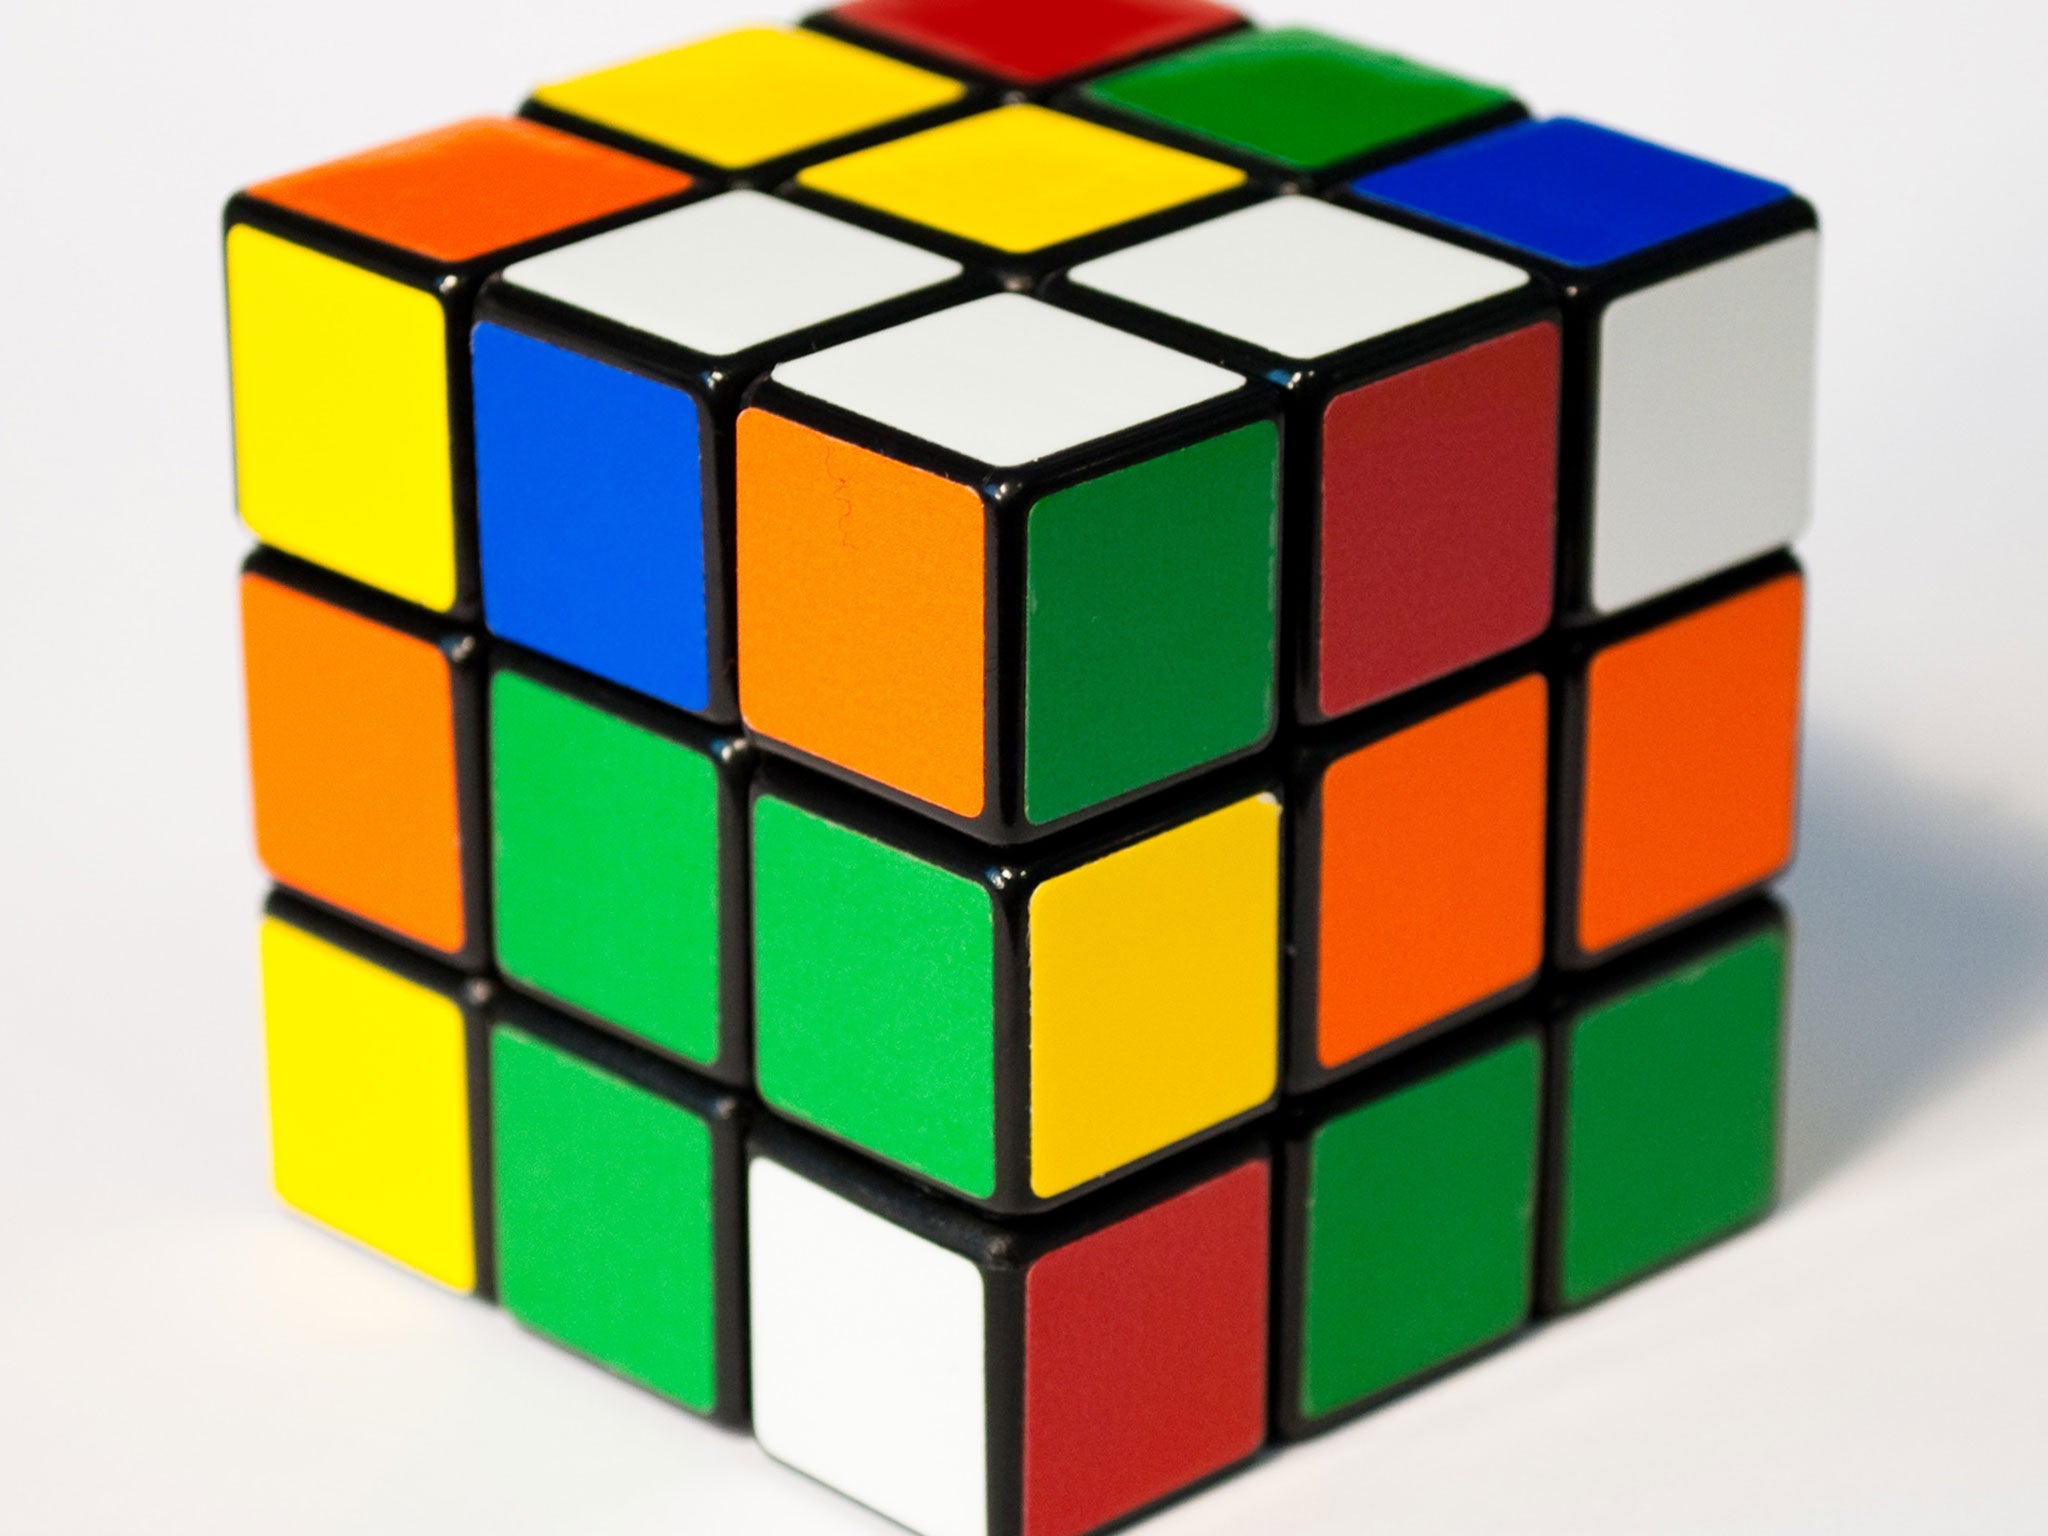 Rubik's Cube shape is not a trademark, EU rules